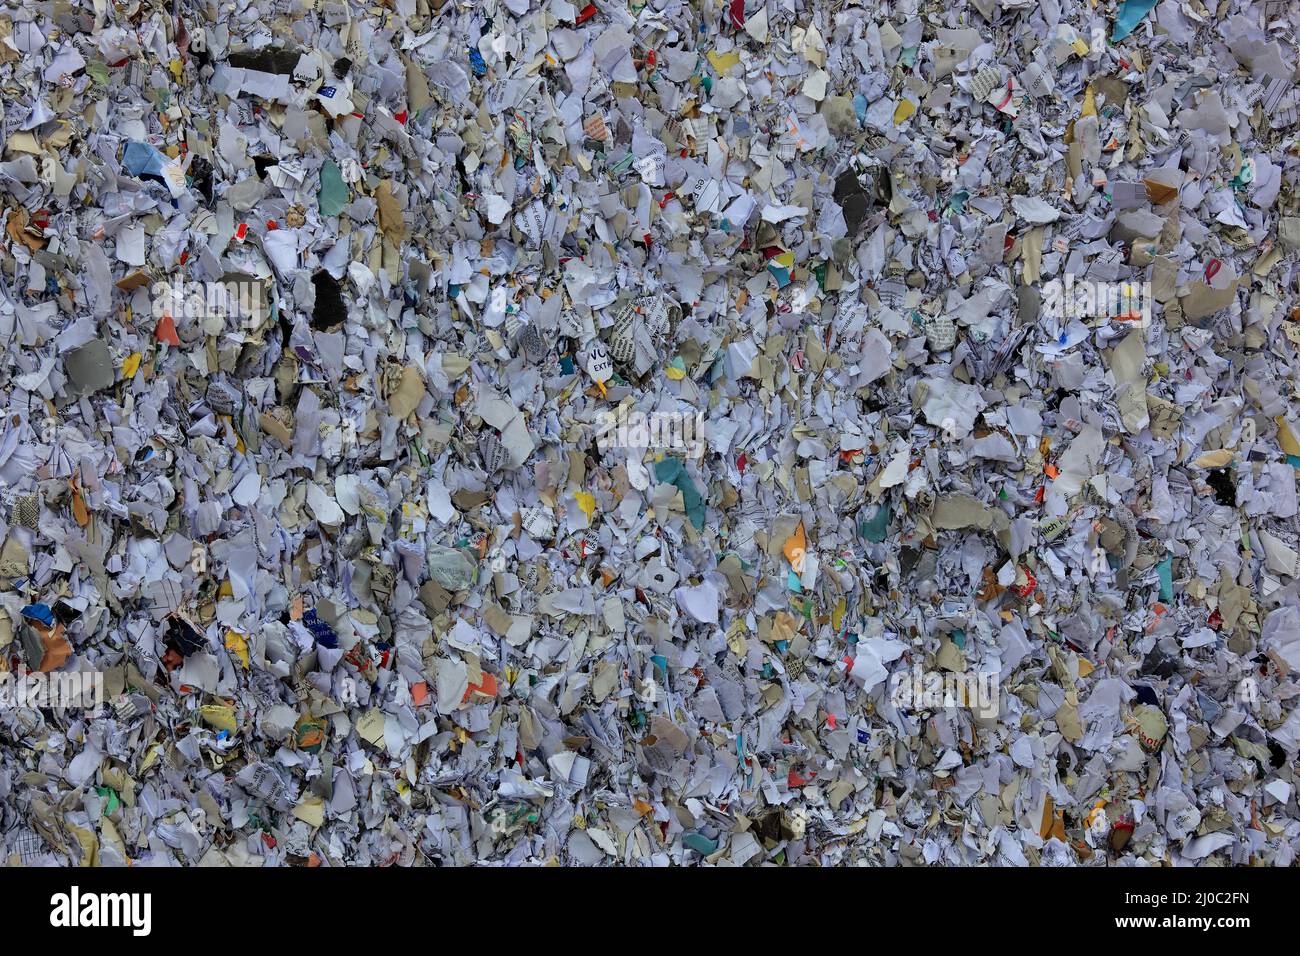 geschreddertes Altpapier für Recycling  /  Shredded waste paper for recycling Stock Photo